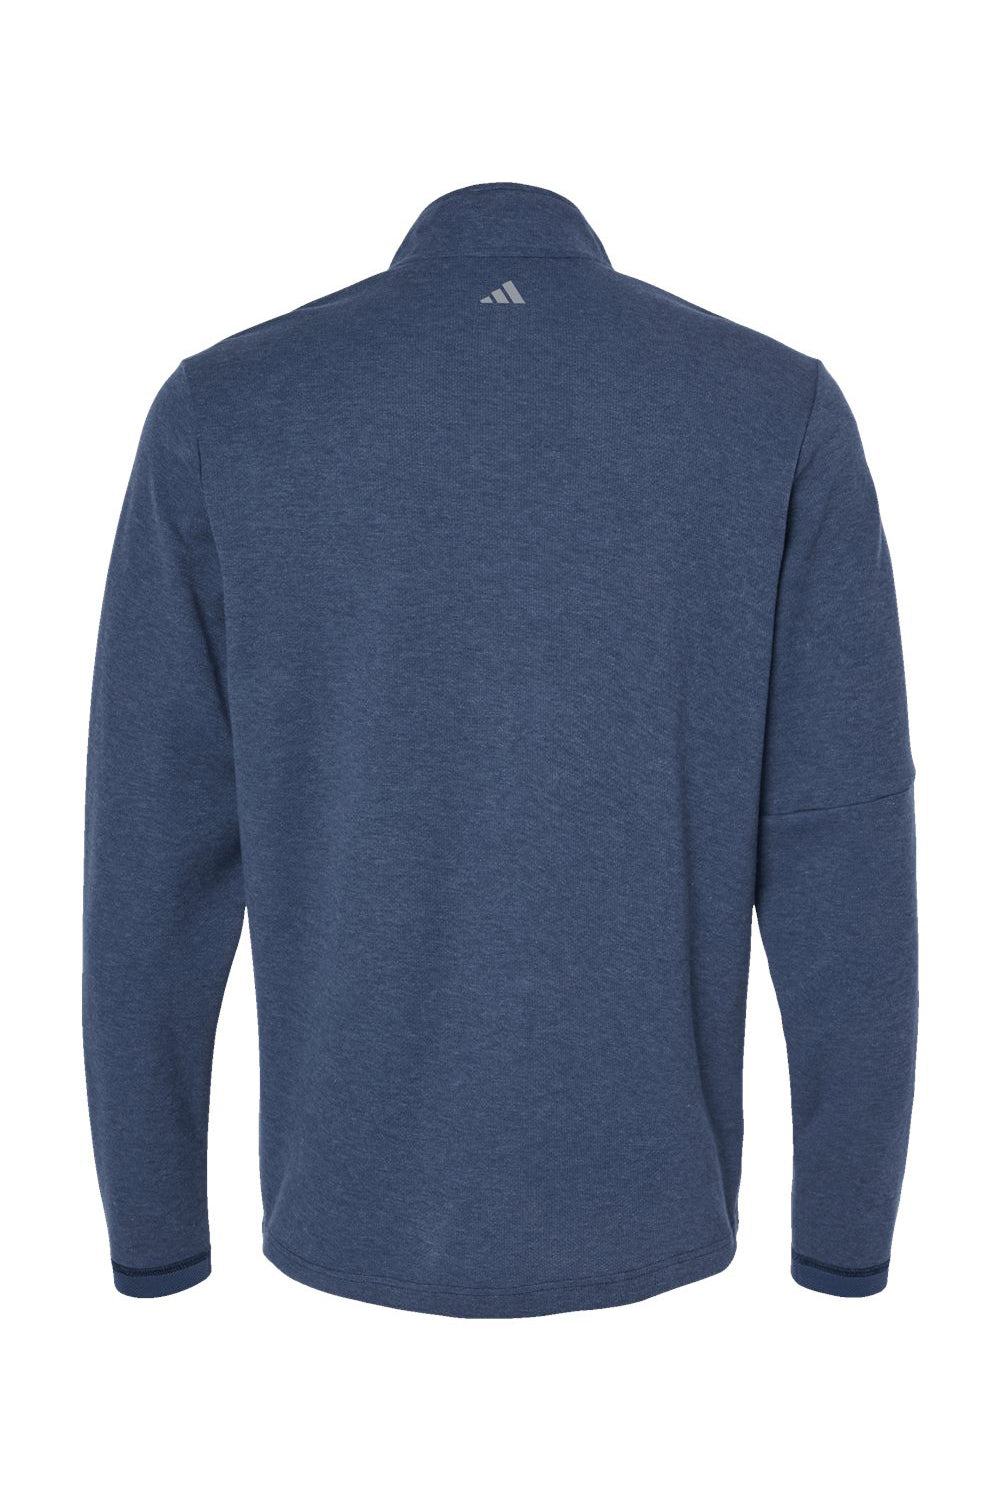 Adidas A554 Mens 3 Stripes 1/4 Zip Sweater Collegiate Navy Blue Melange Flat Back